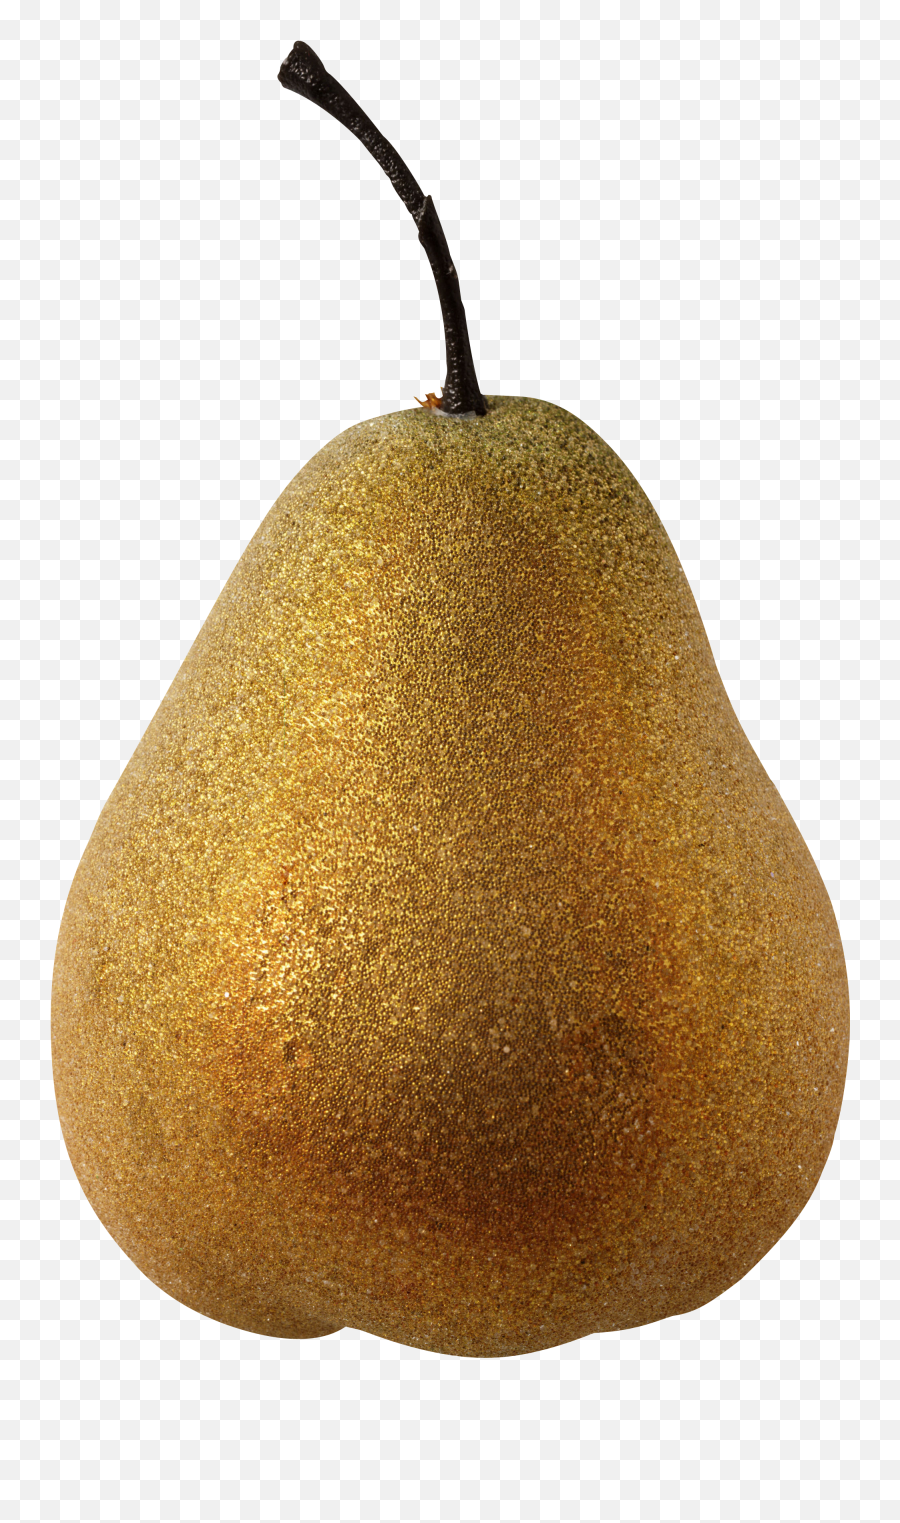 Ripe Pear Png Image - Pera Madura,Pear Png